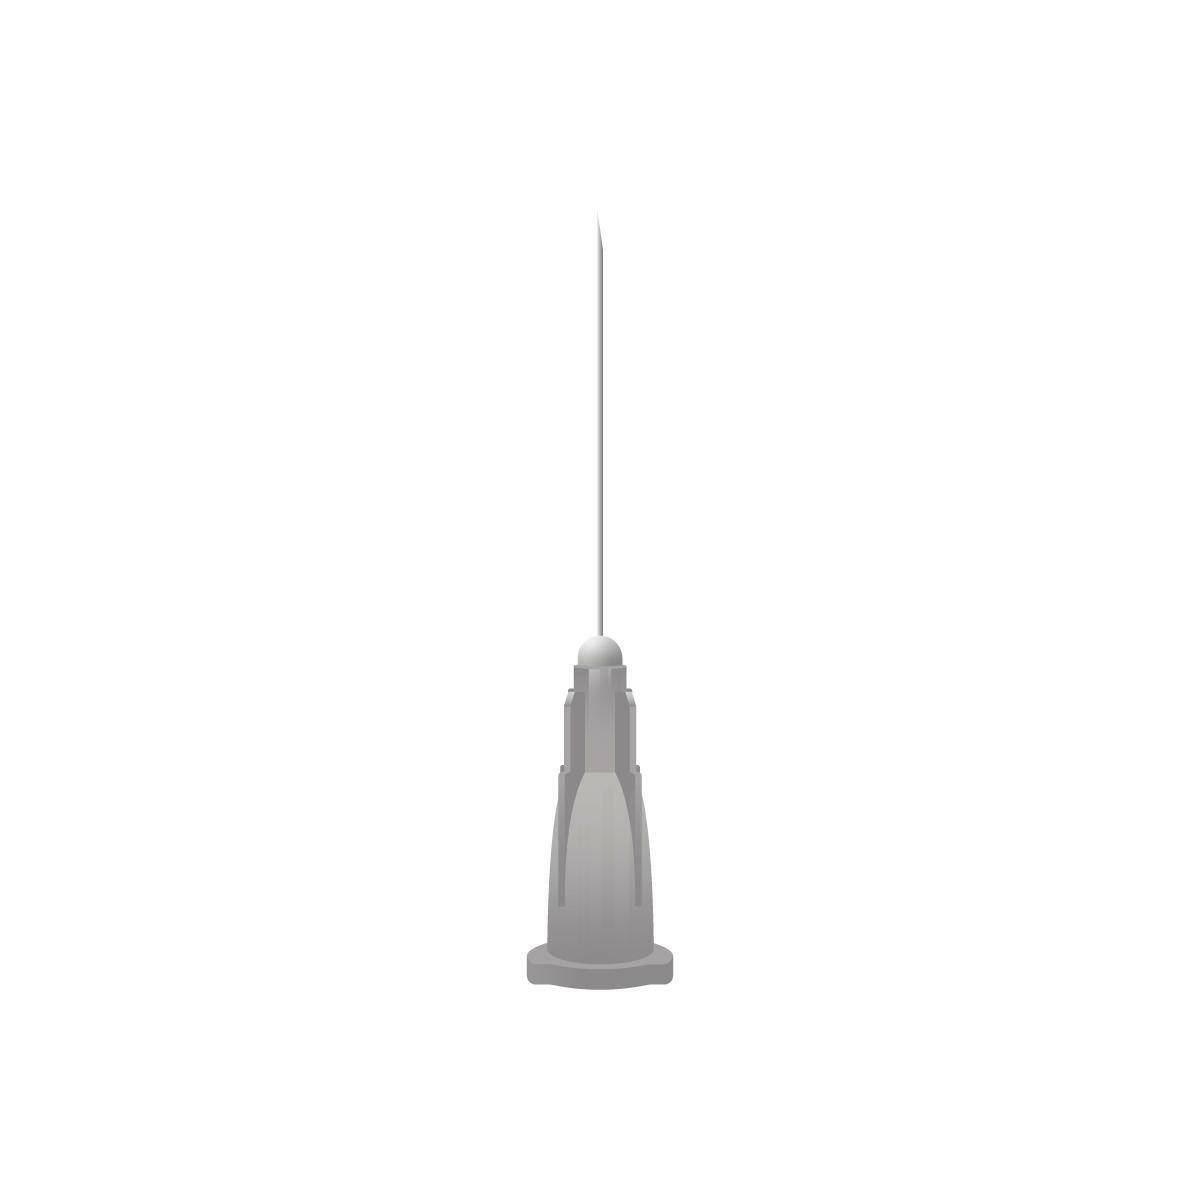 27g Grey 40mm Meso-relle Mesotherapy Needle - UKMEDI